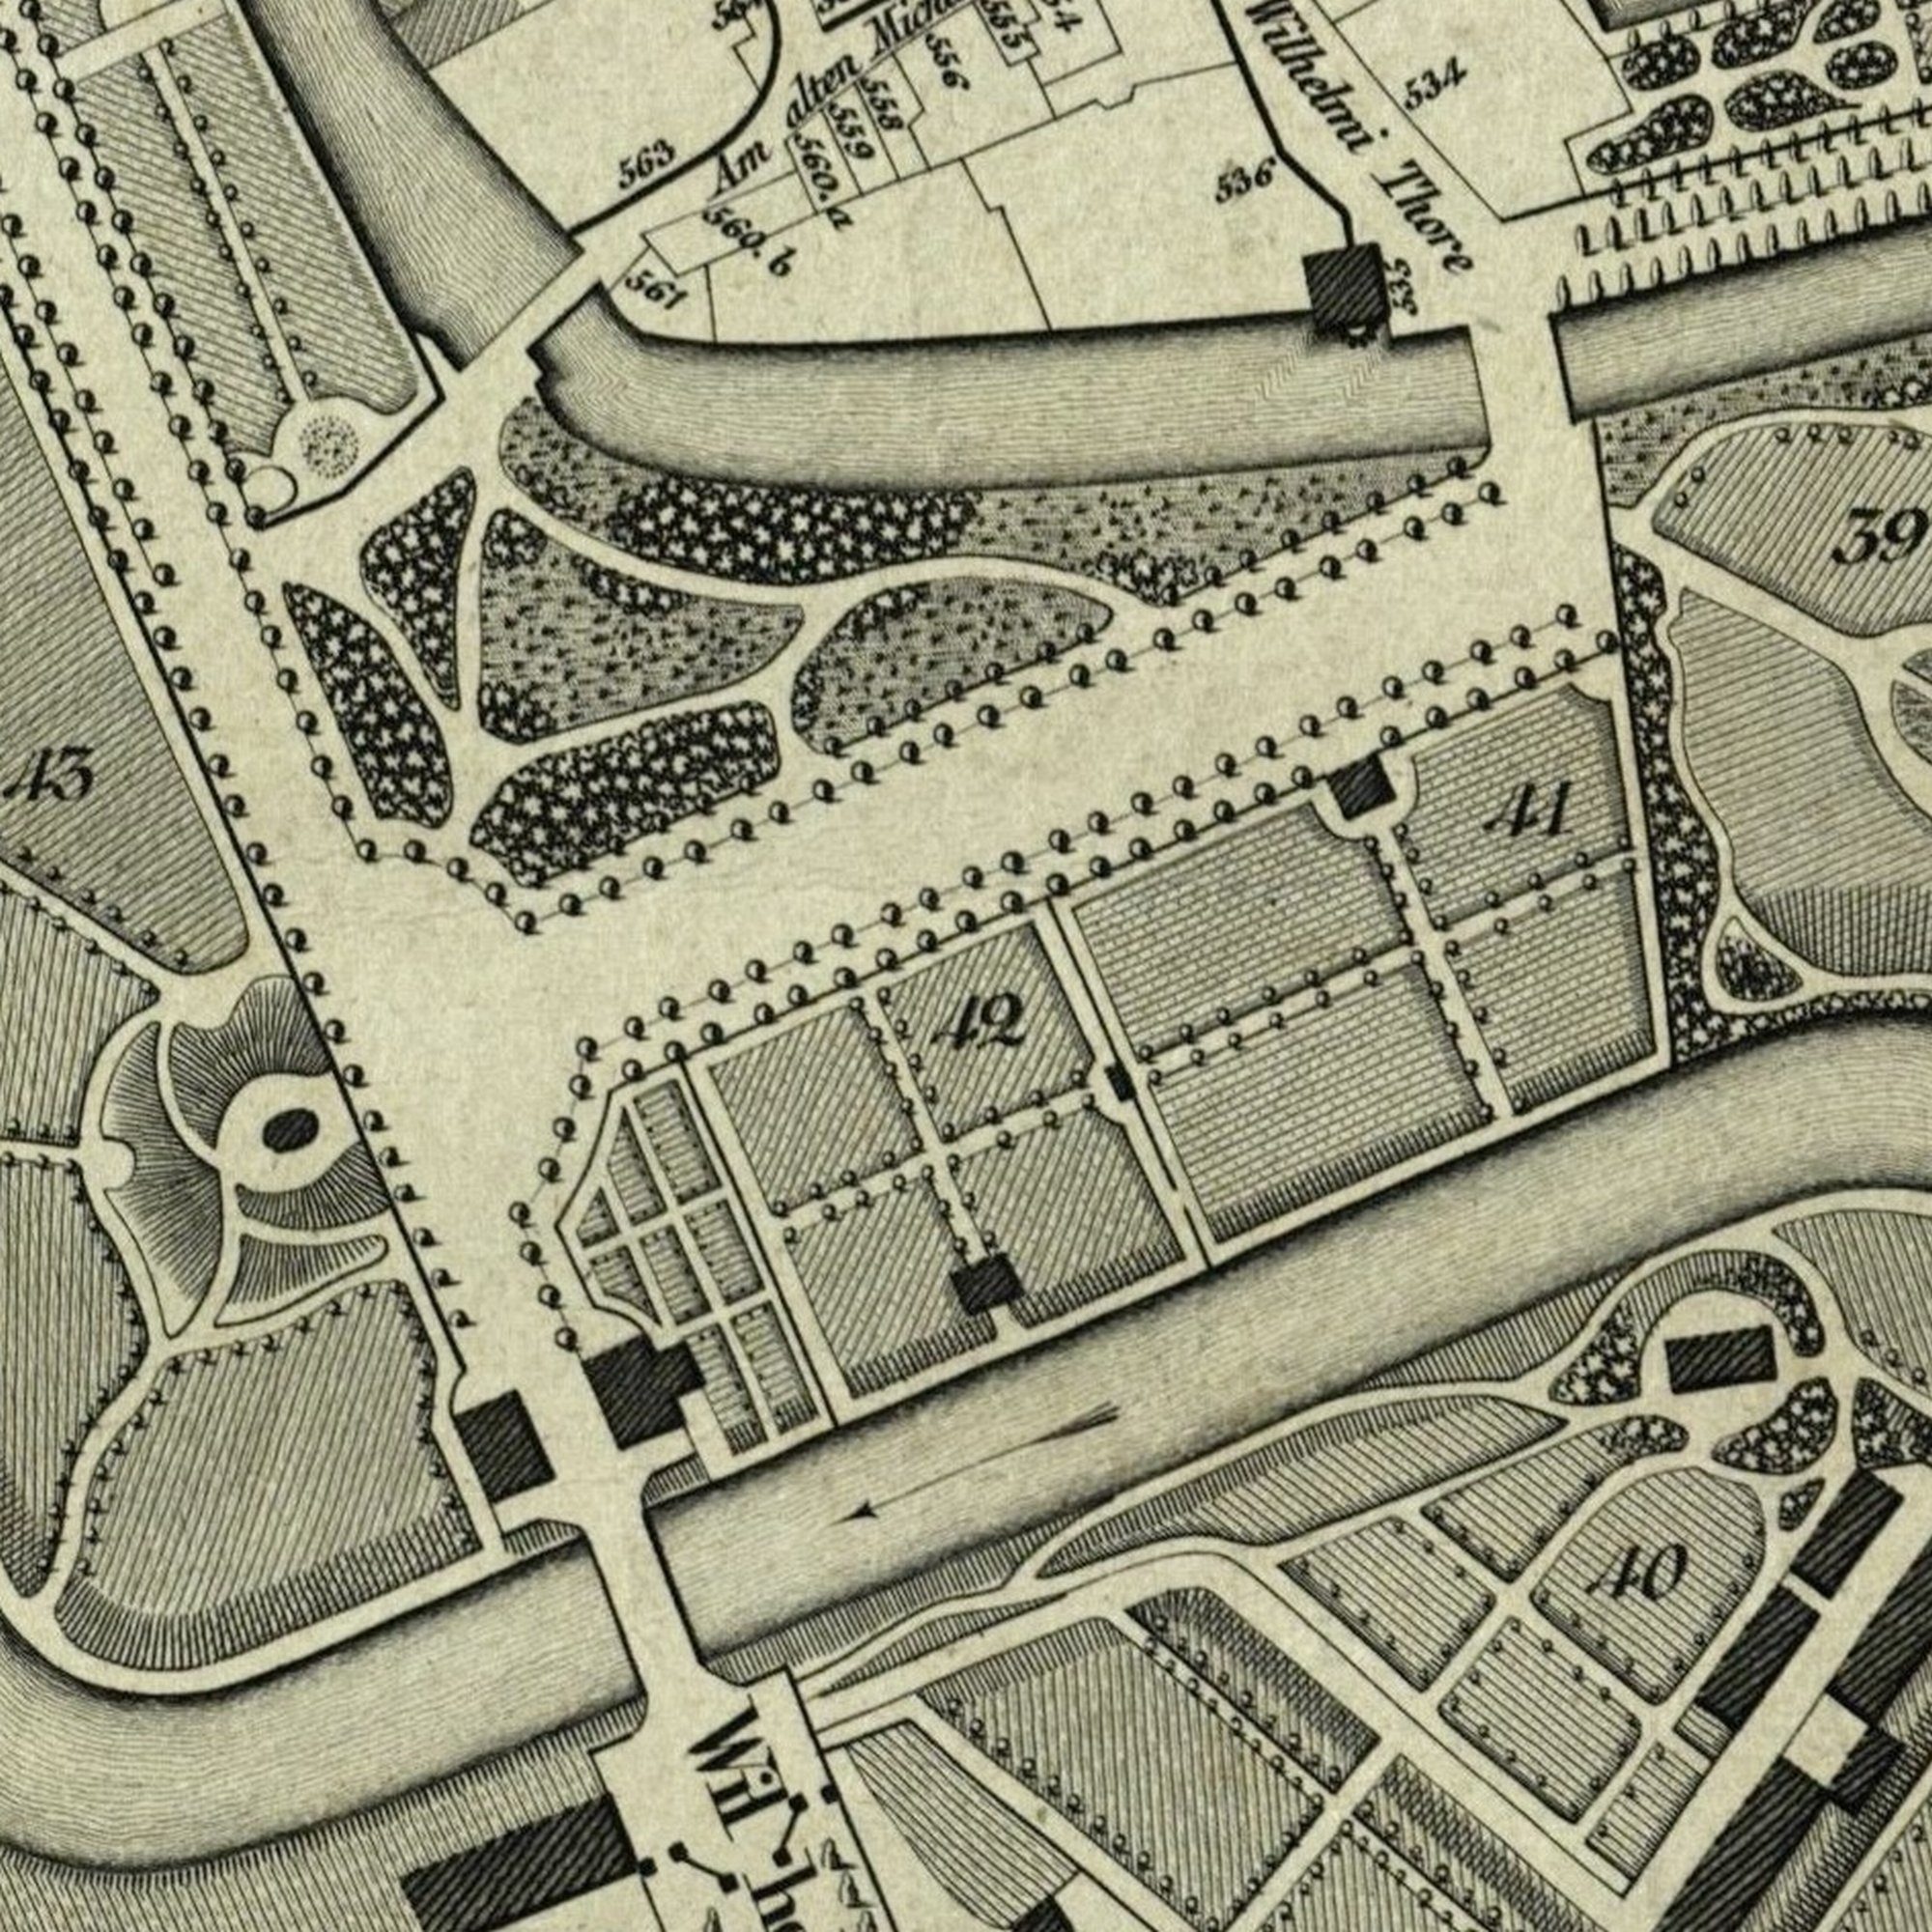 Wilhelmitorbrücke, Stadtplan, 1826